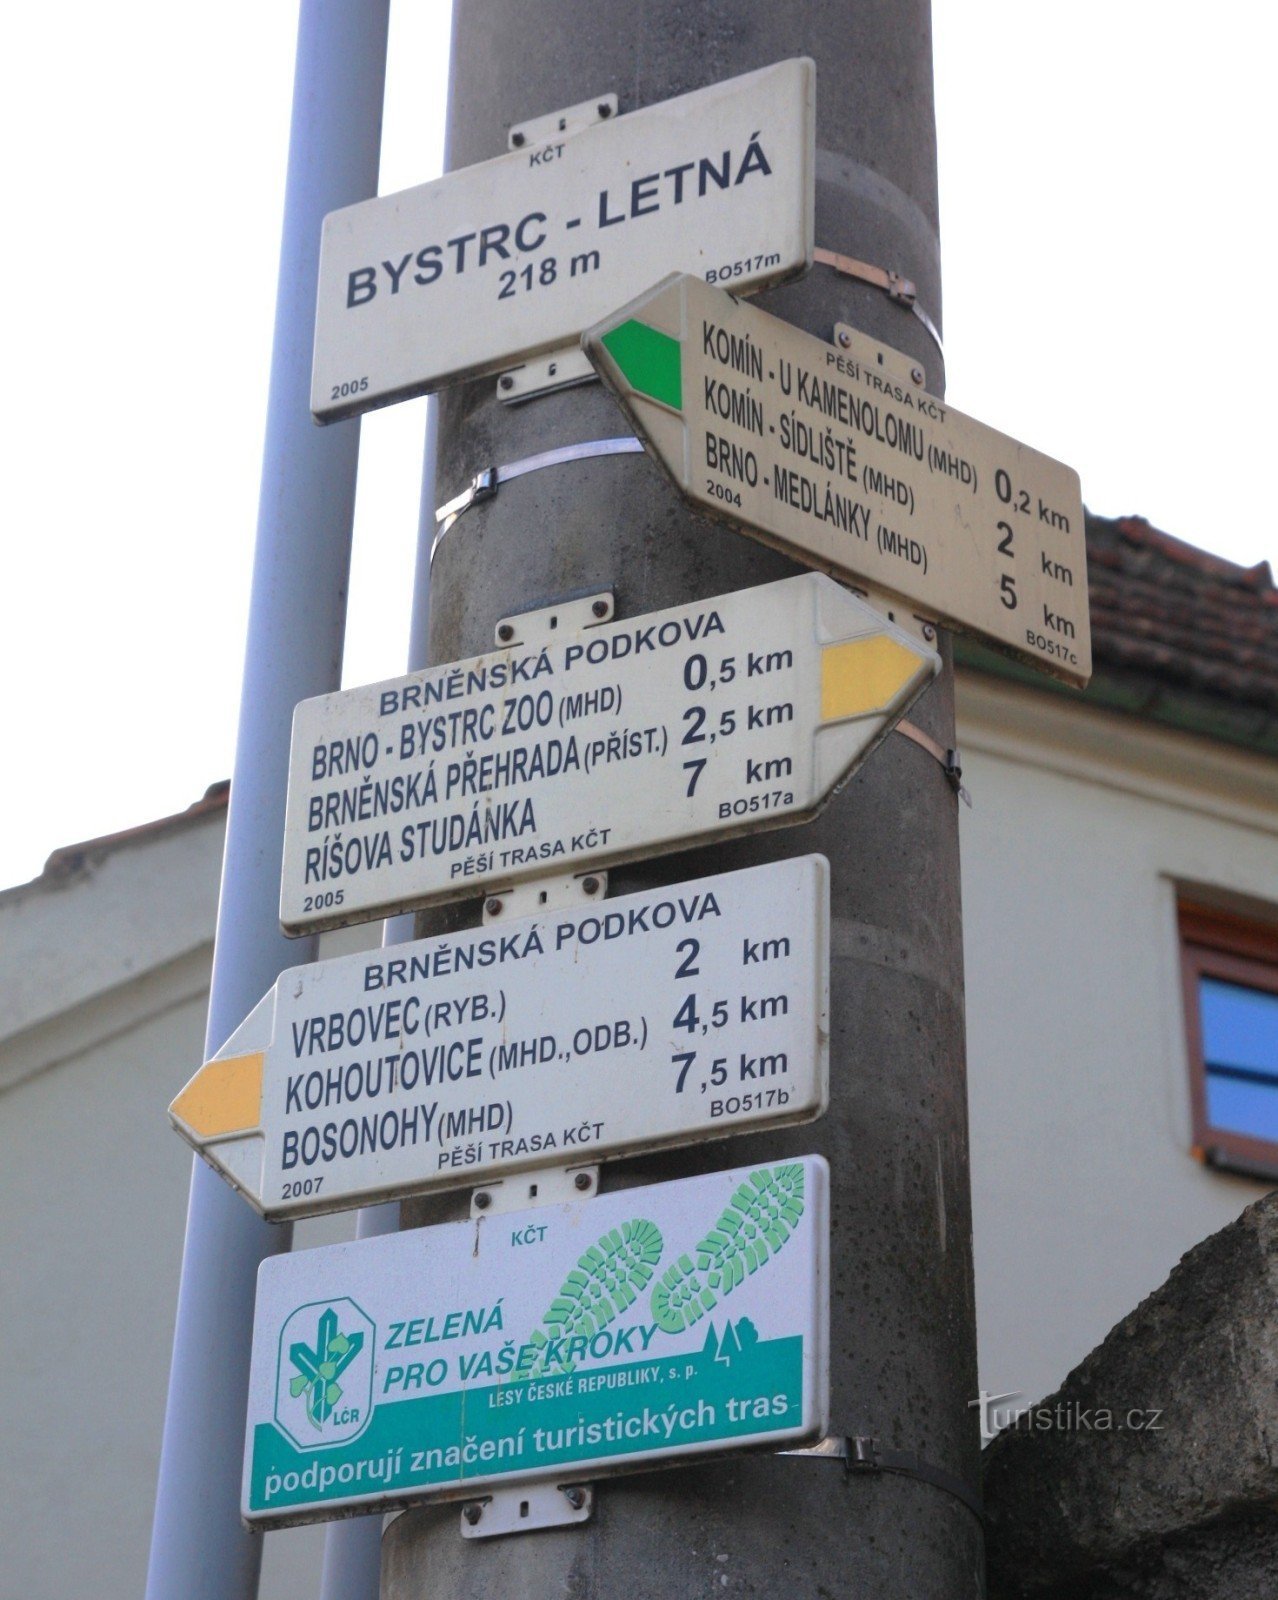 Tourist crossroads Bystrc-Letná